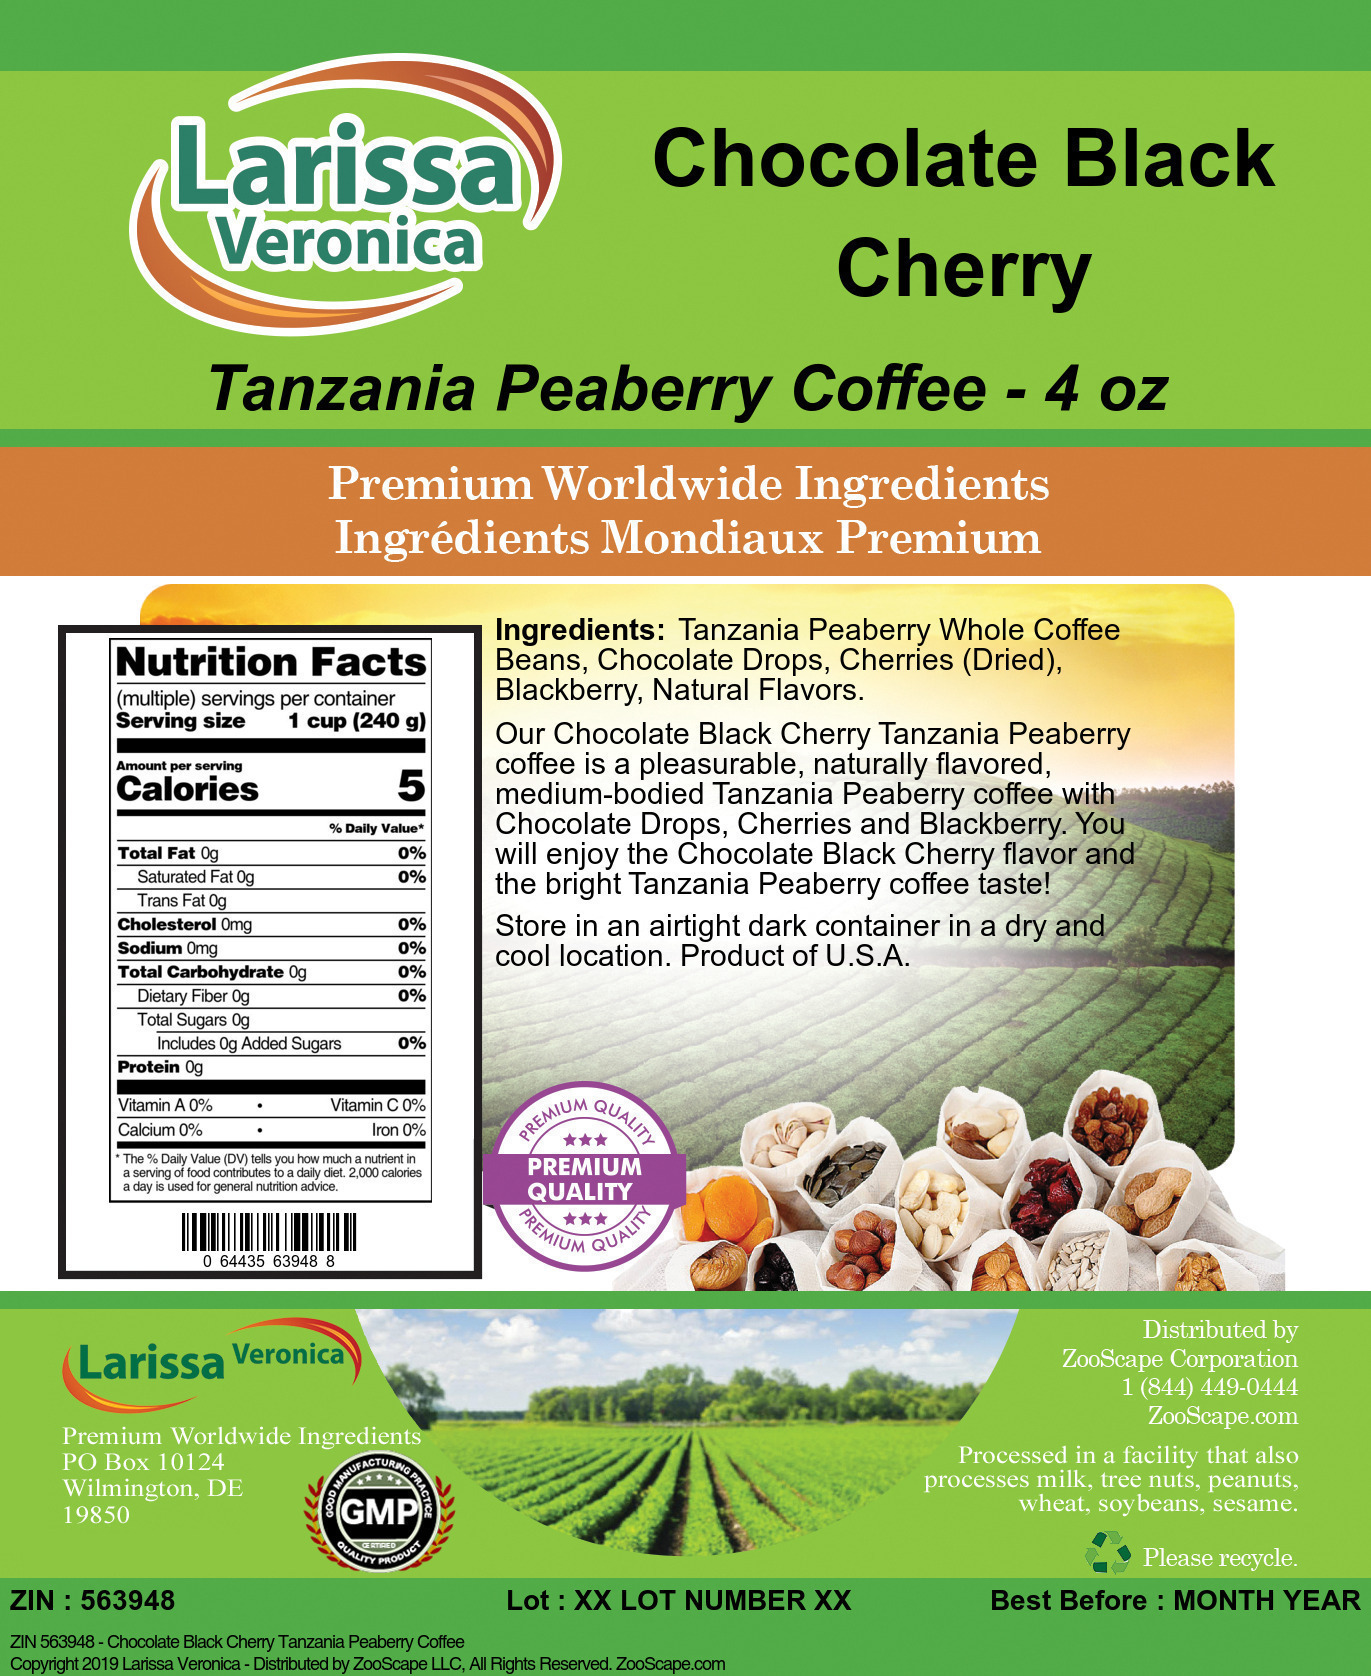 Chocolate Black Cherry Tanzania Peaberry Coffee - Label